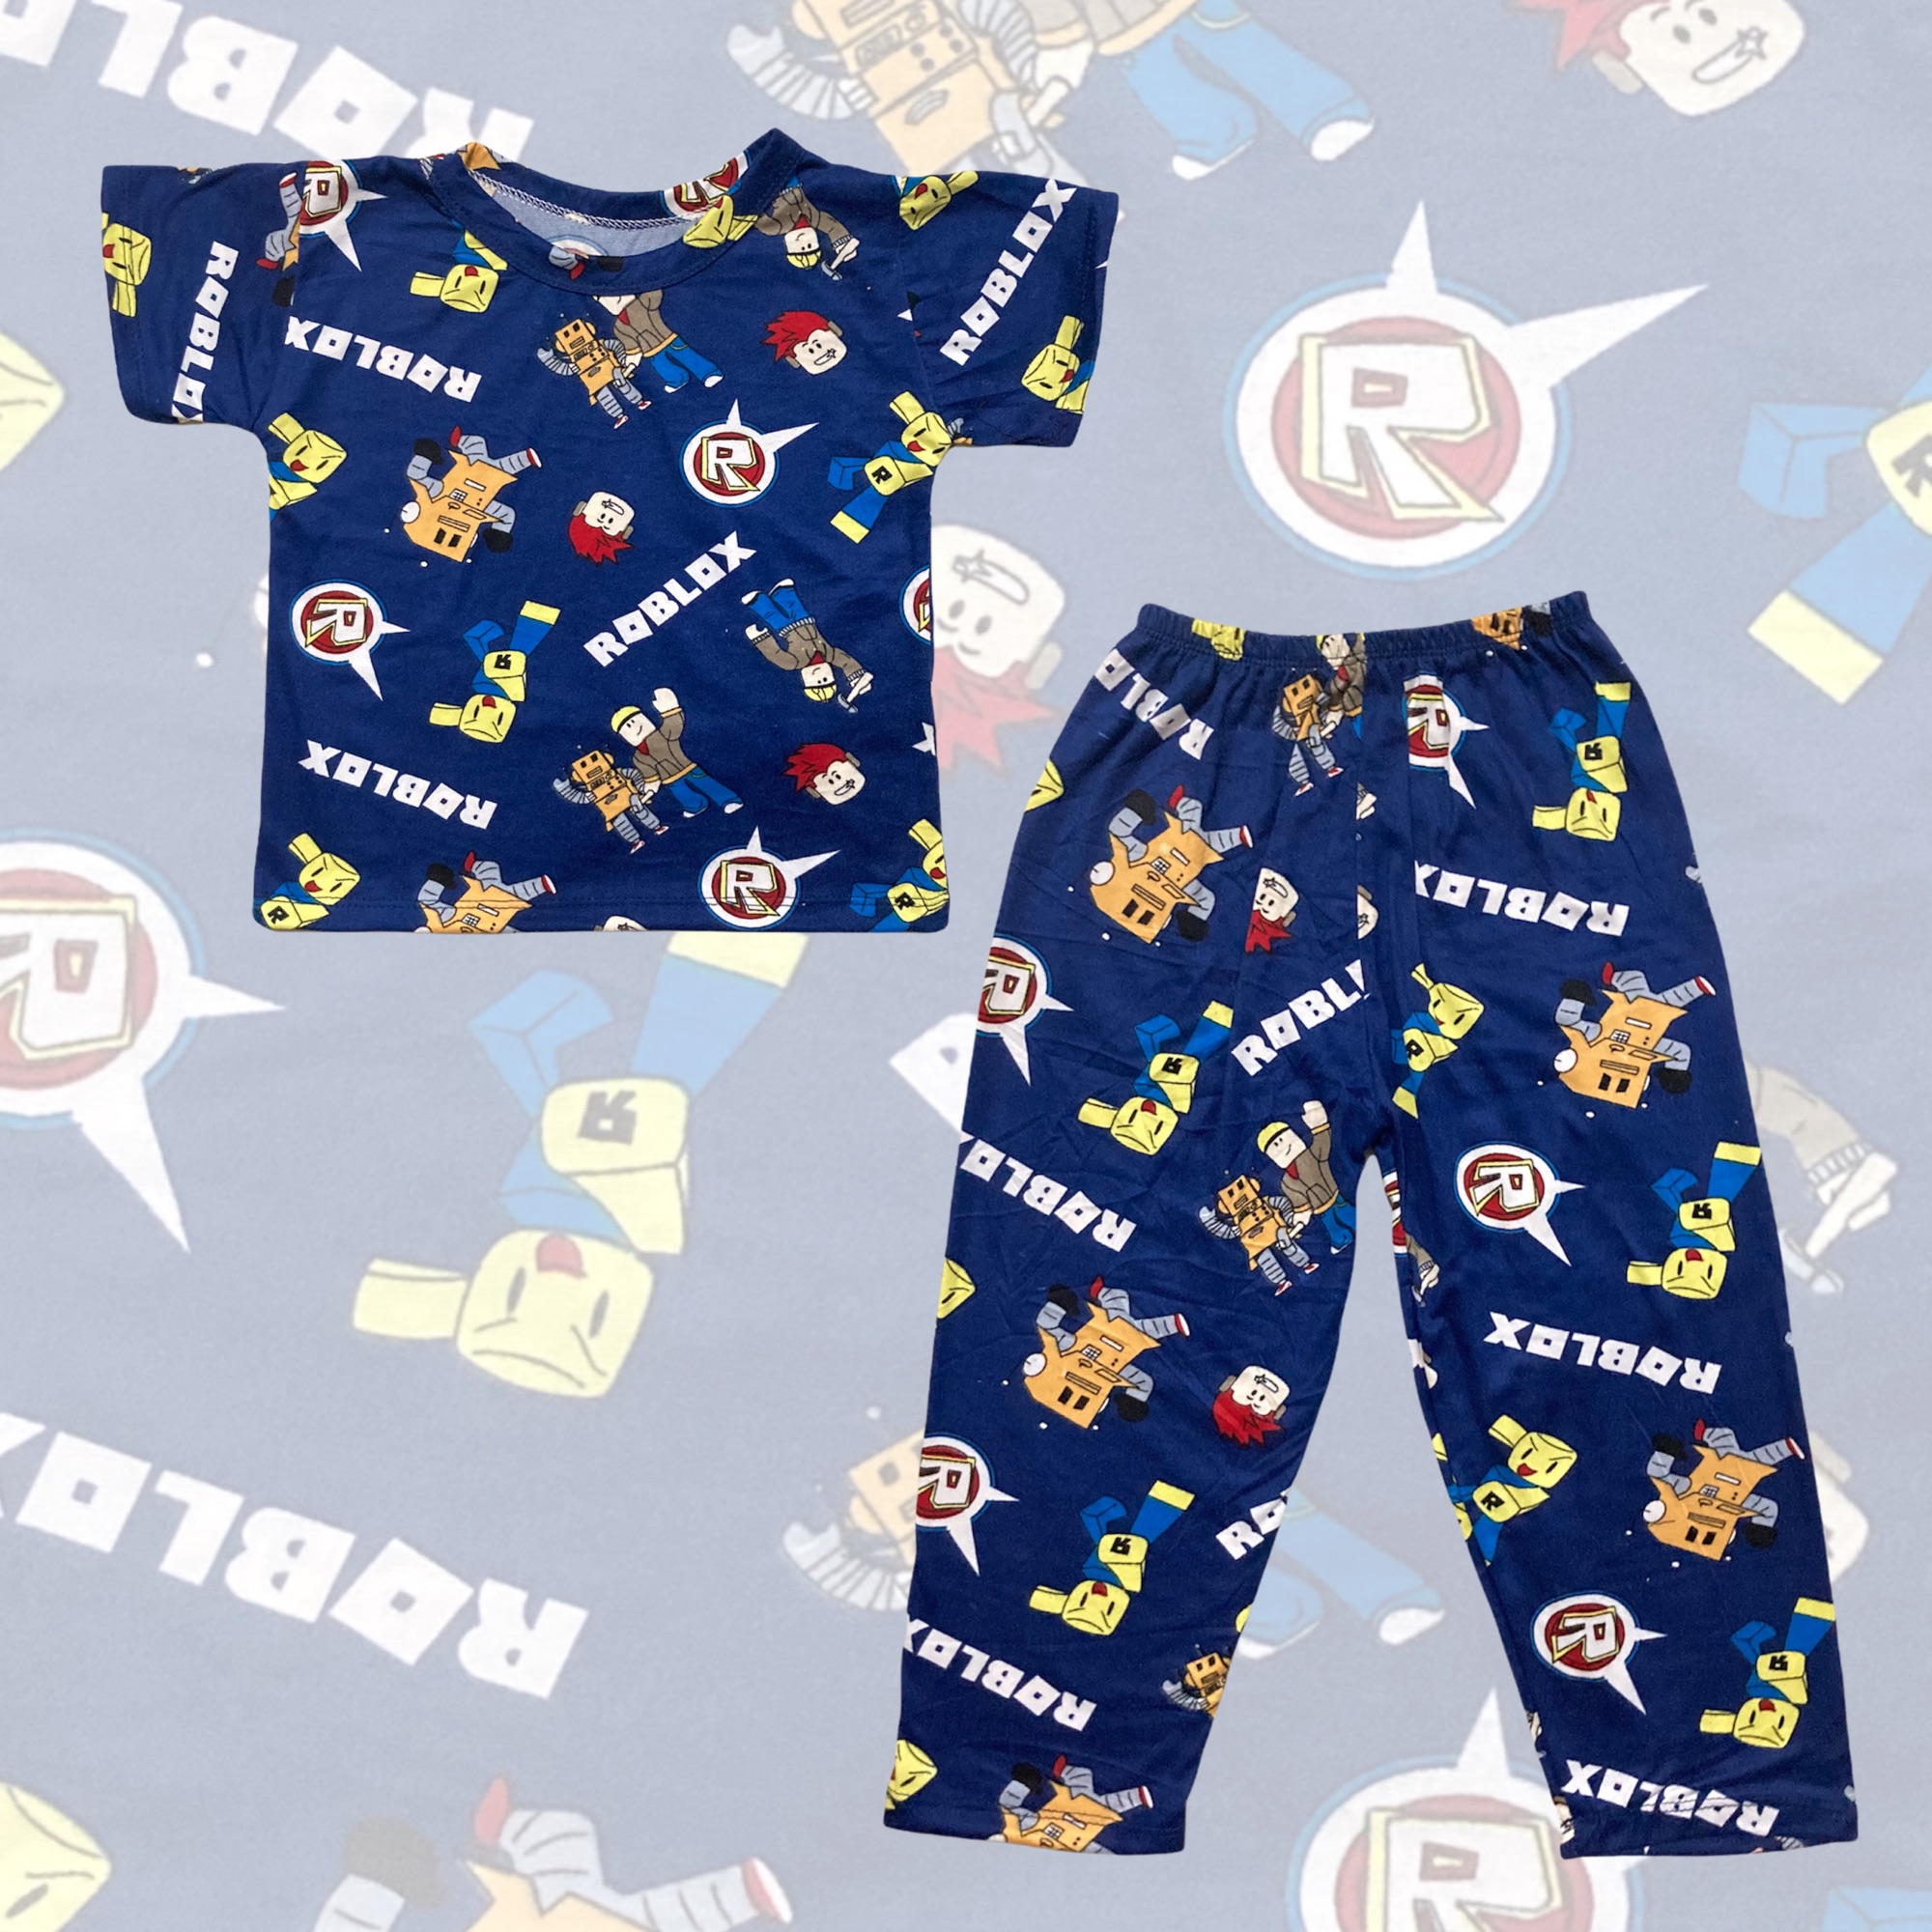 New Roblox - Terno T-shirt and Pajamas Only ₱109.00! #kids terno